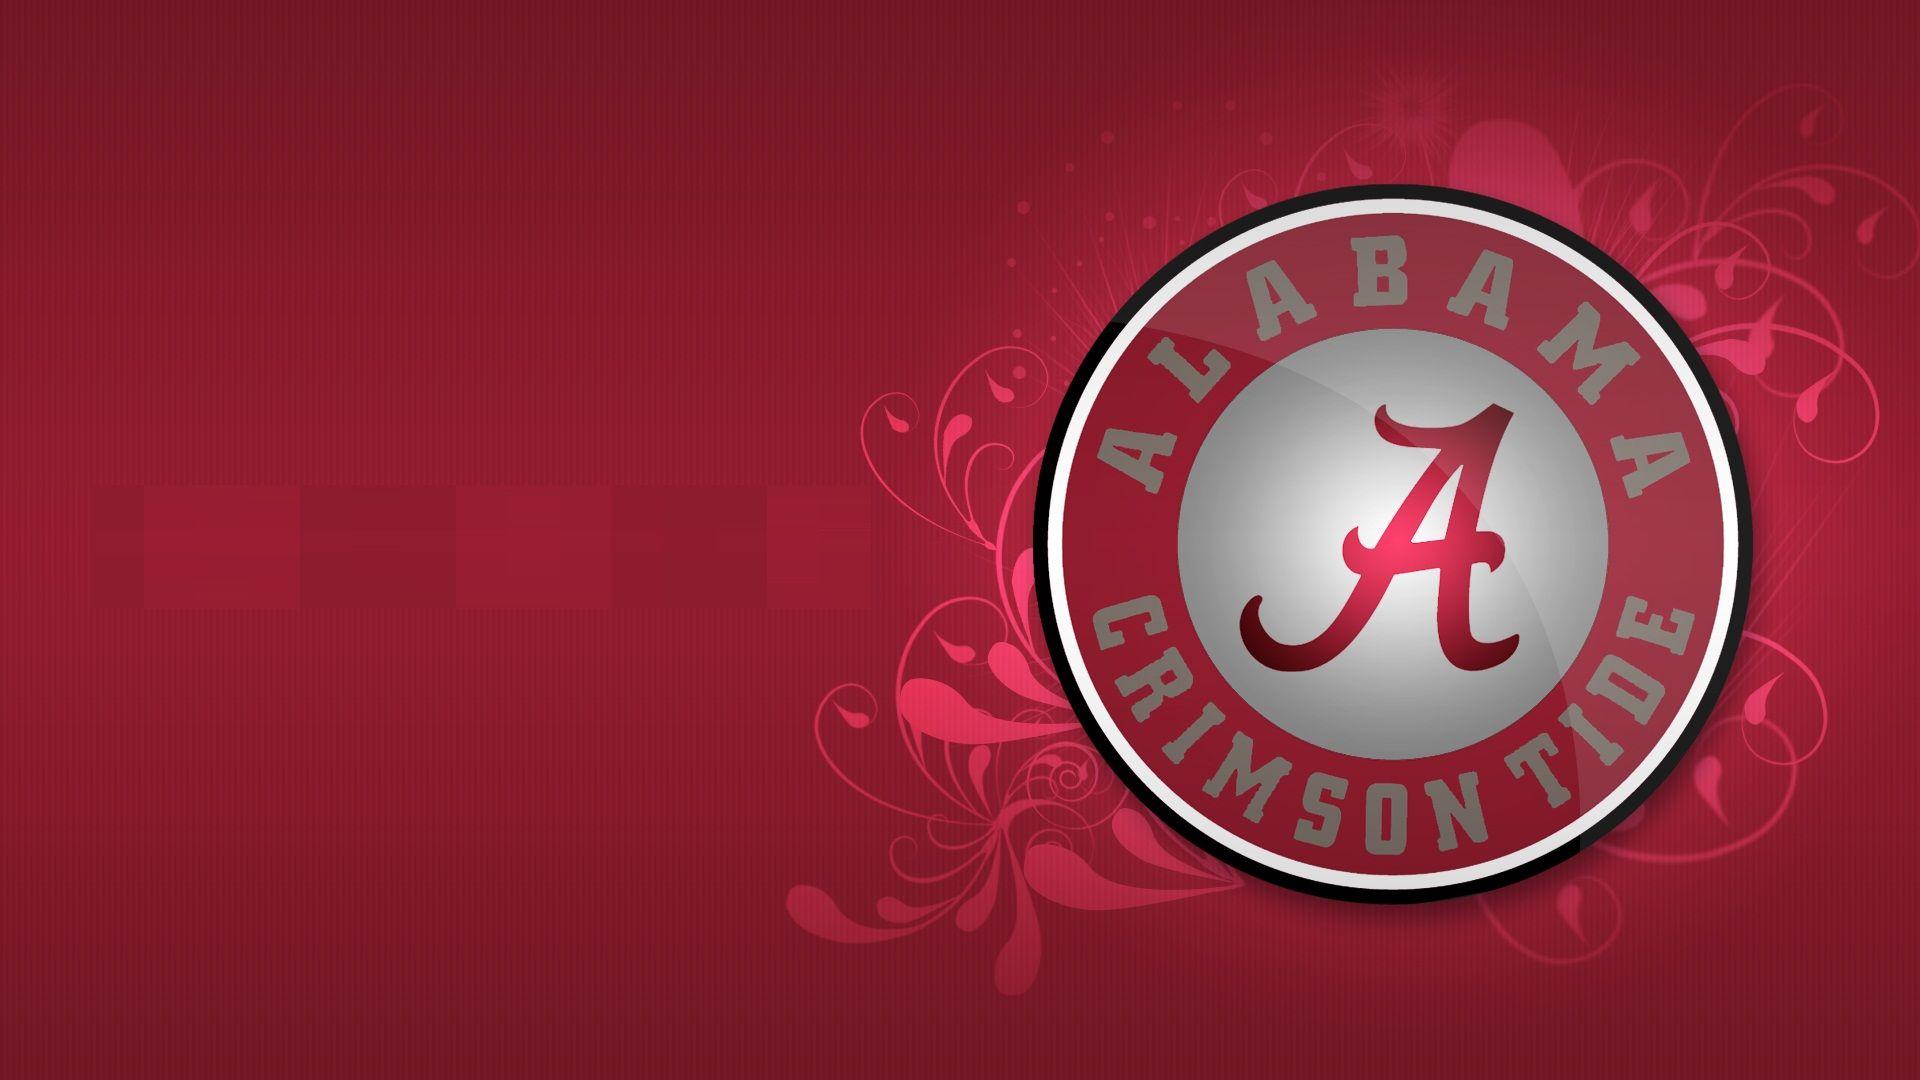 Alabama Football Logo Wallpaper 27342 High Resolution. download